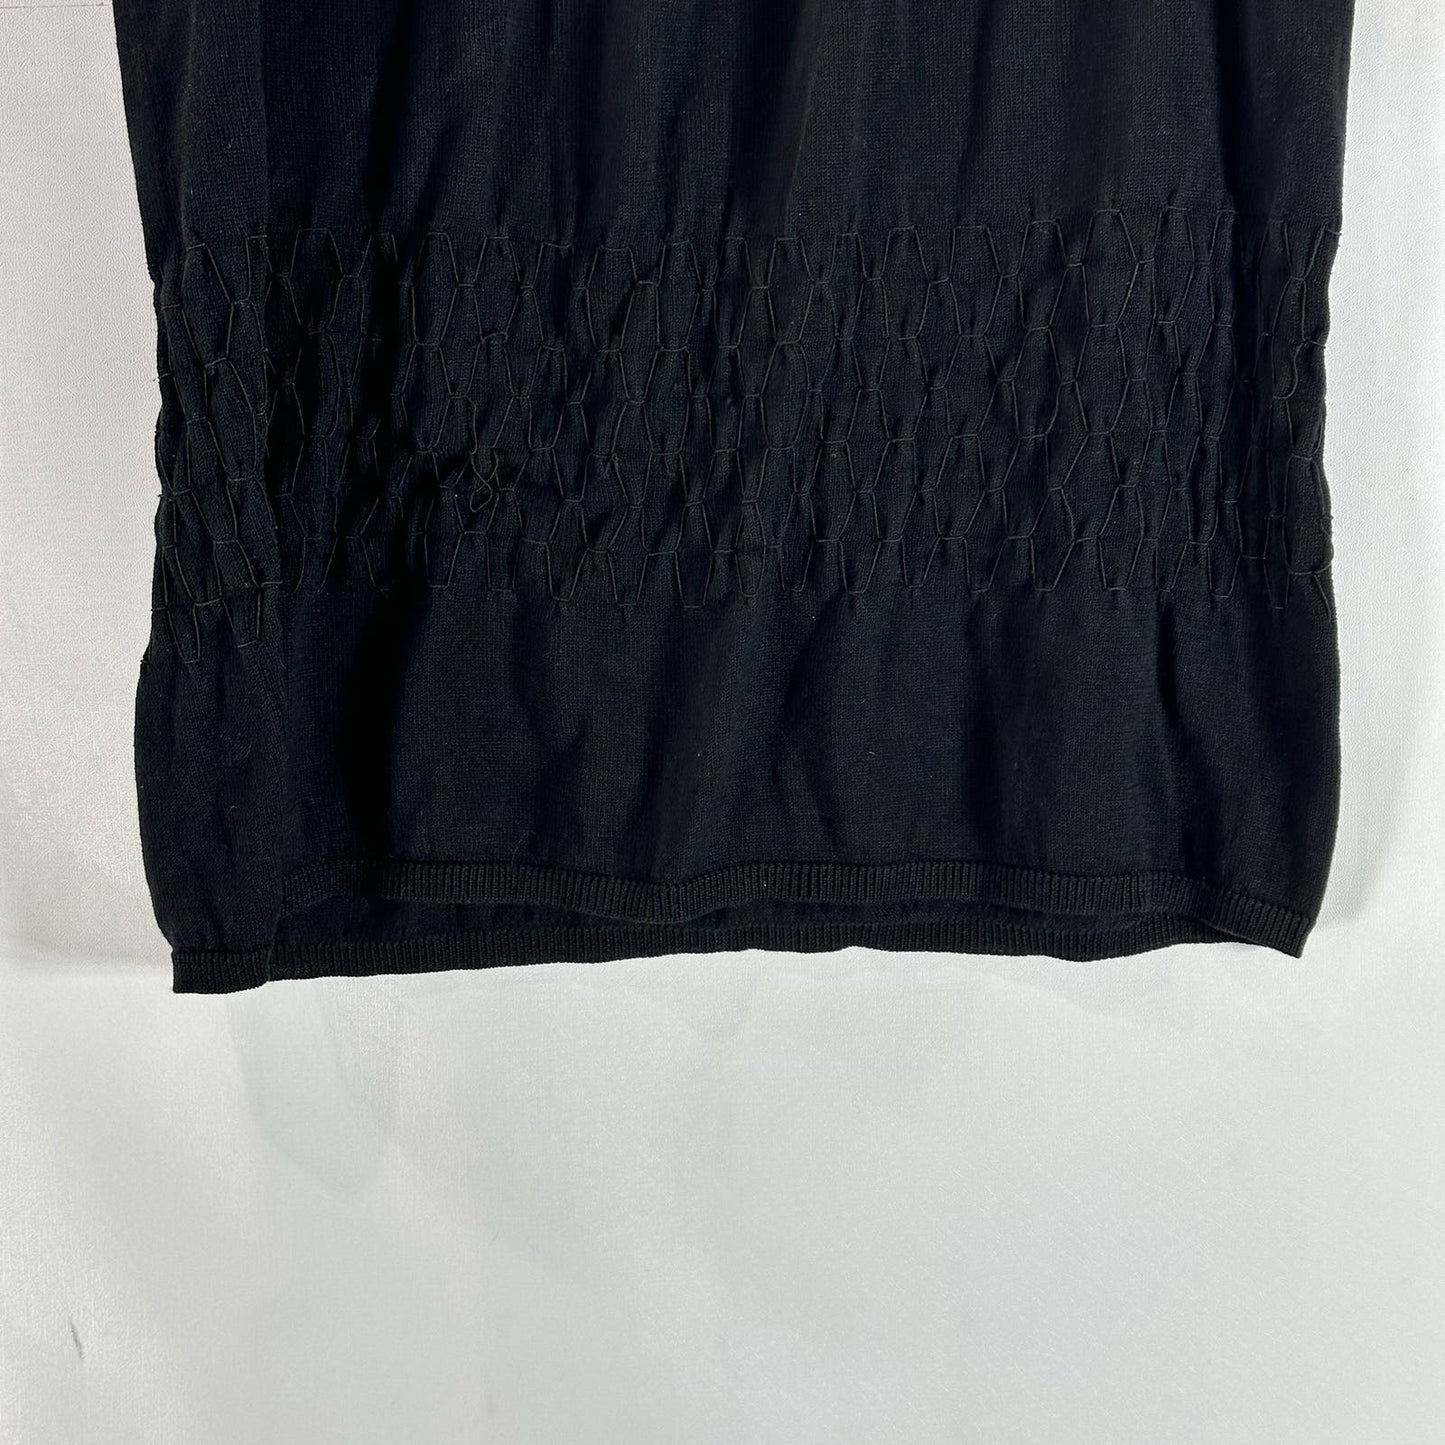 KENNETH COLE NEW YORK Women's Black Silk Deep Scoop-Neck Textured Tank Top SZ L